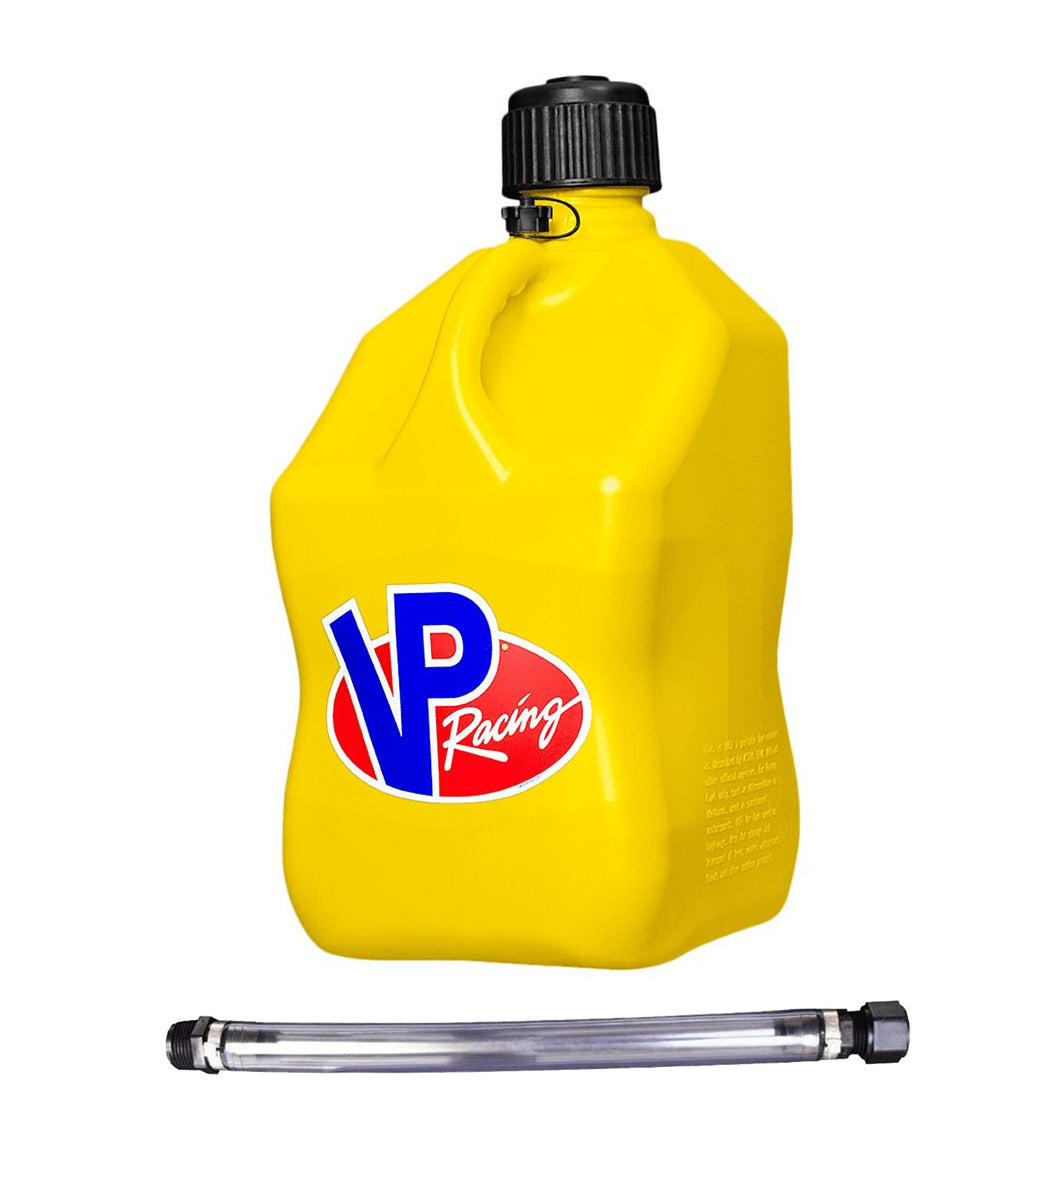 VP Racing 5.5-Gallon Motorsport Container - Yellow Jug, Black Cap w/Filler Hose - Dirty Racing Products